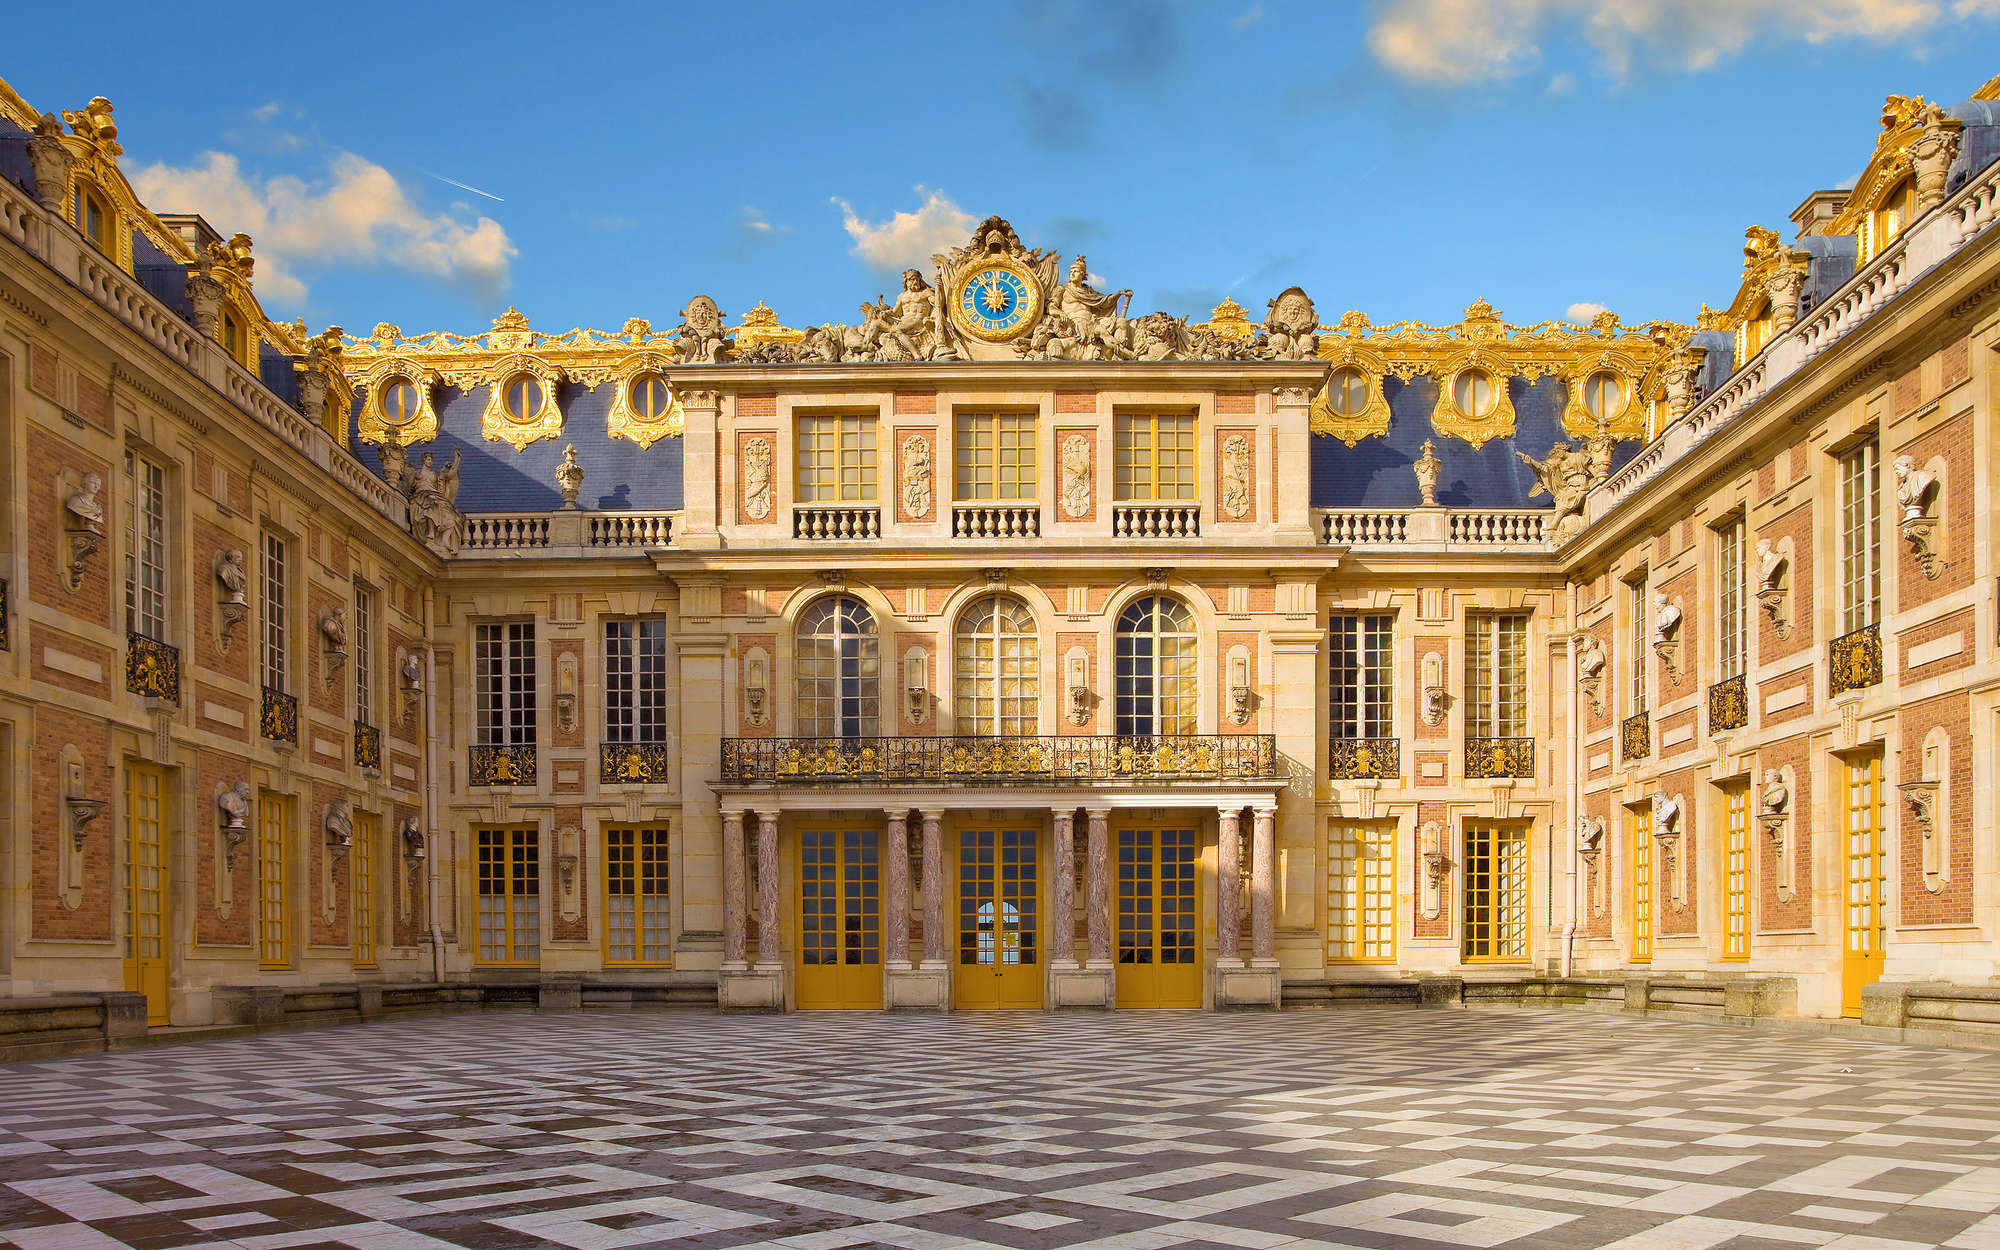             Baroque Wallpaper Palace of Versailles - Pearl Smooth Non-woven
        